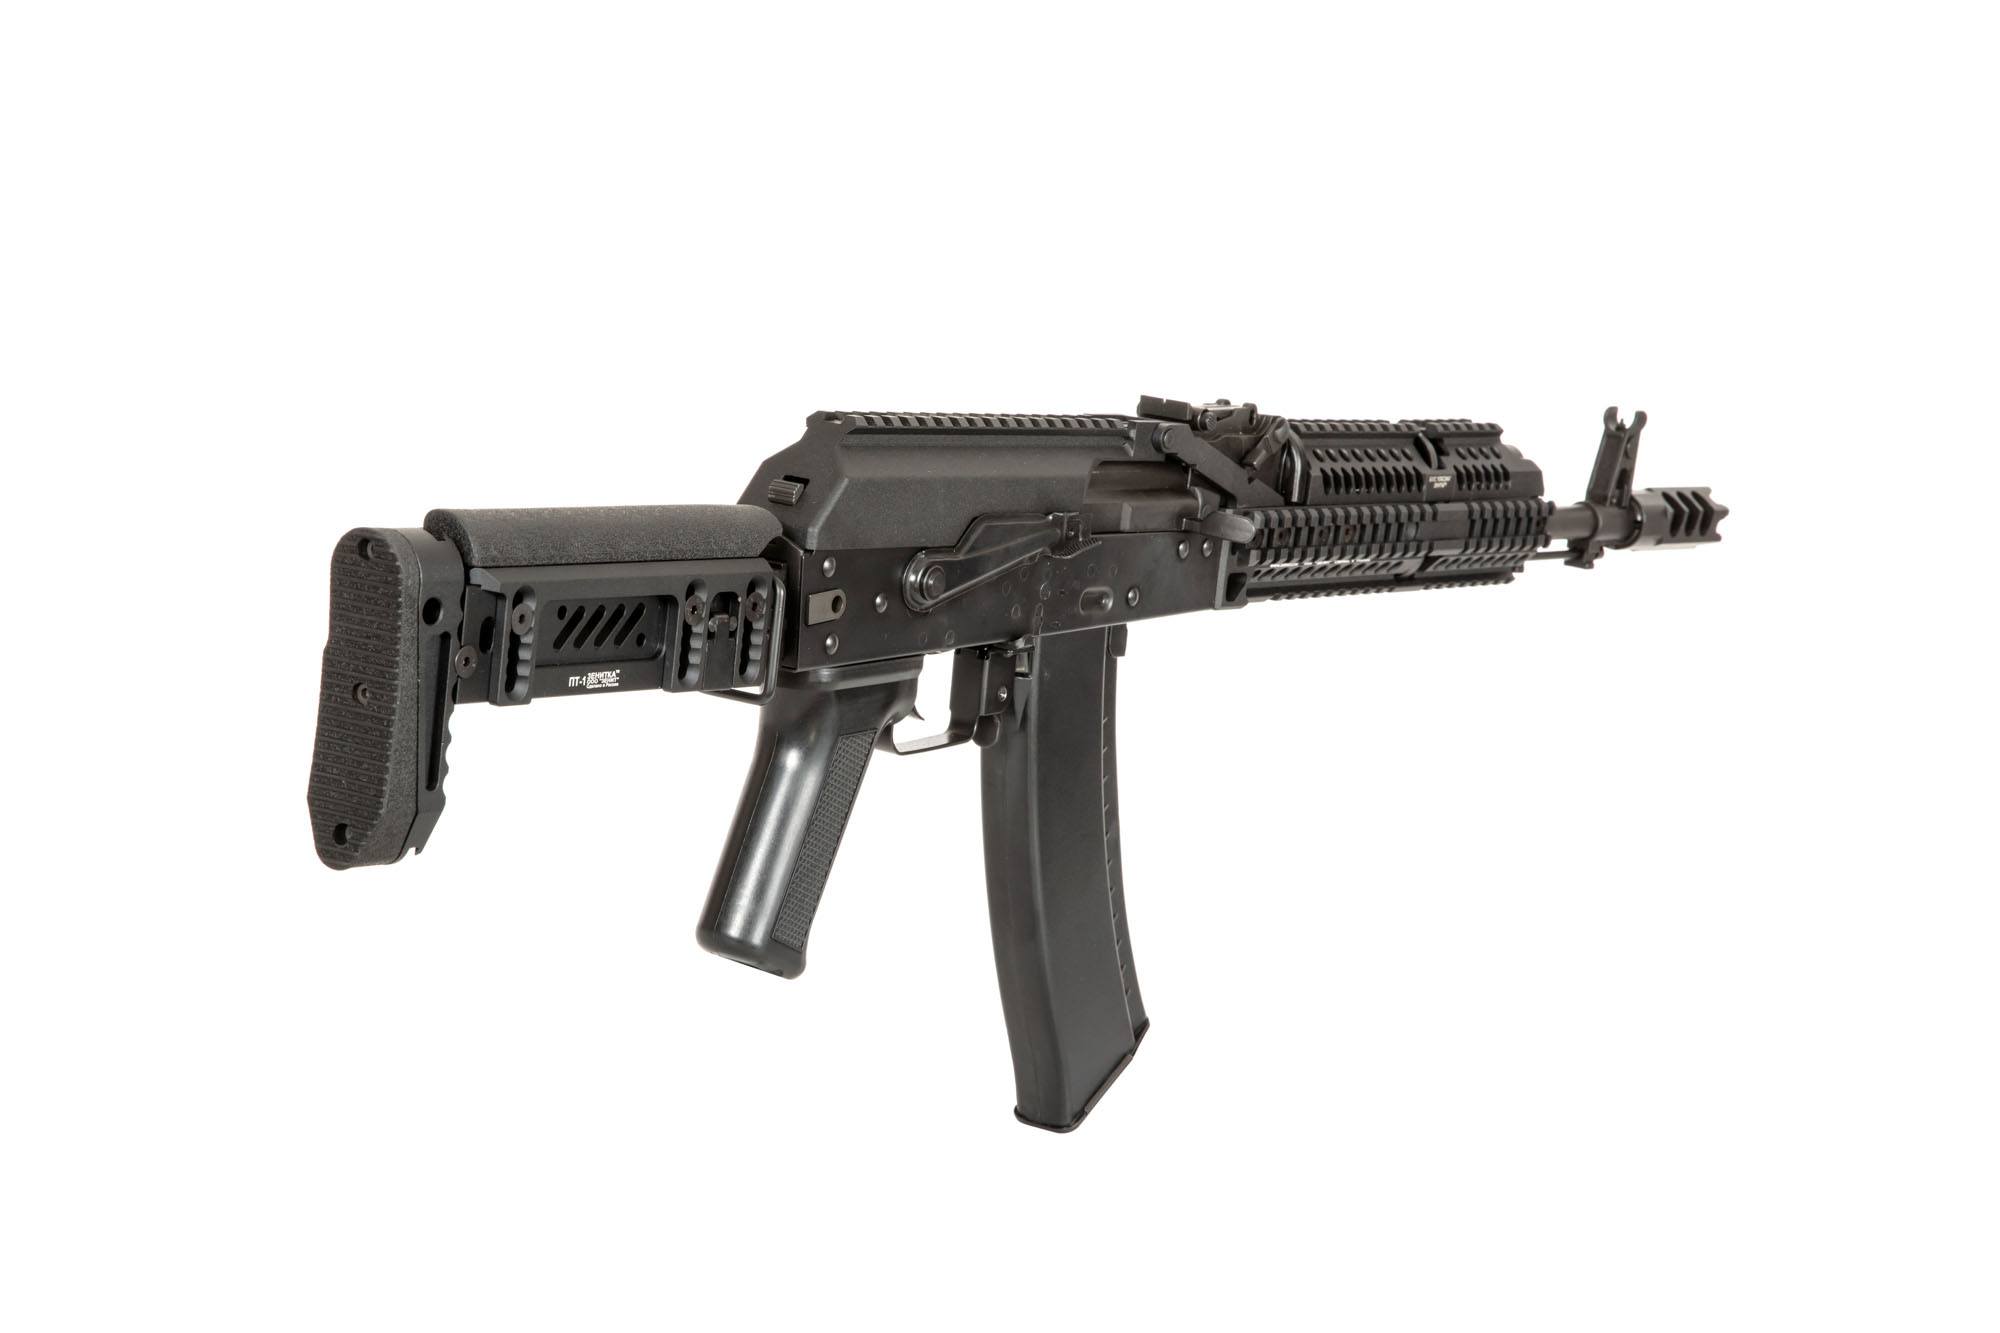 AKS-74M Carbine Replica (ZKS-74M)